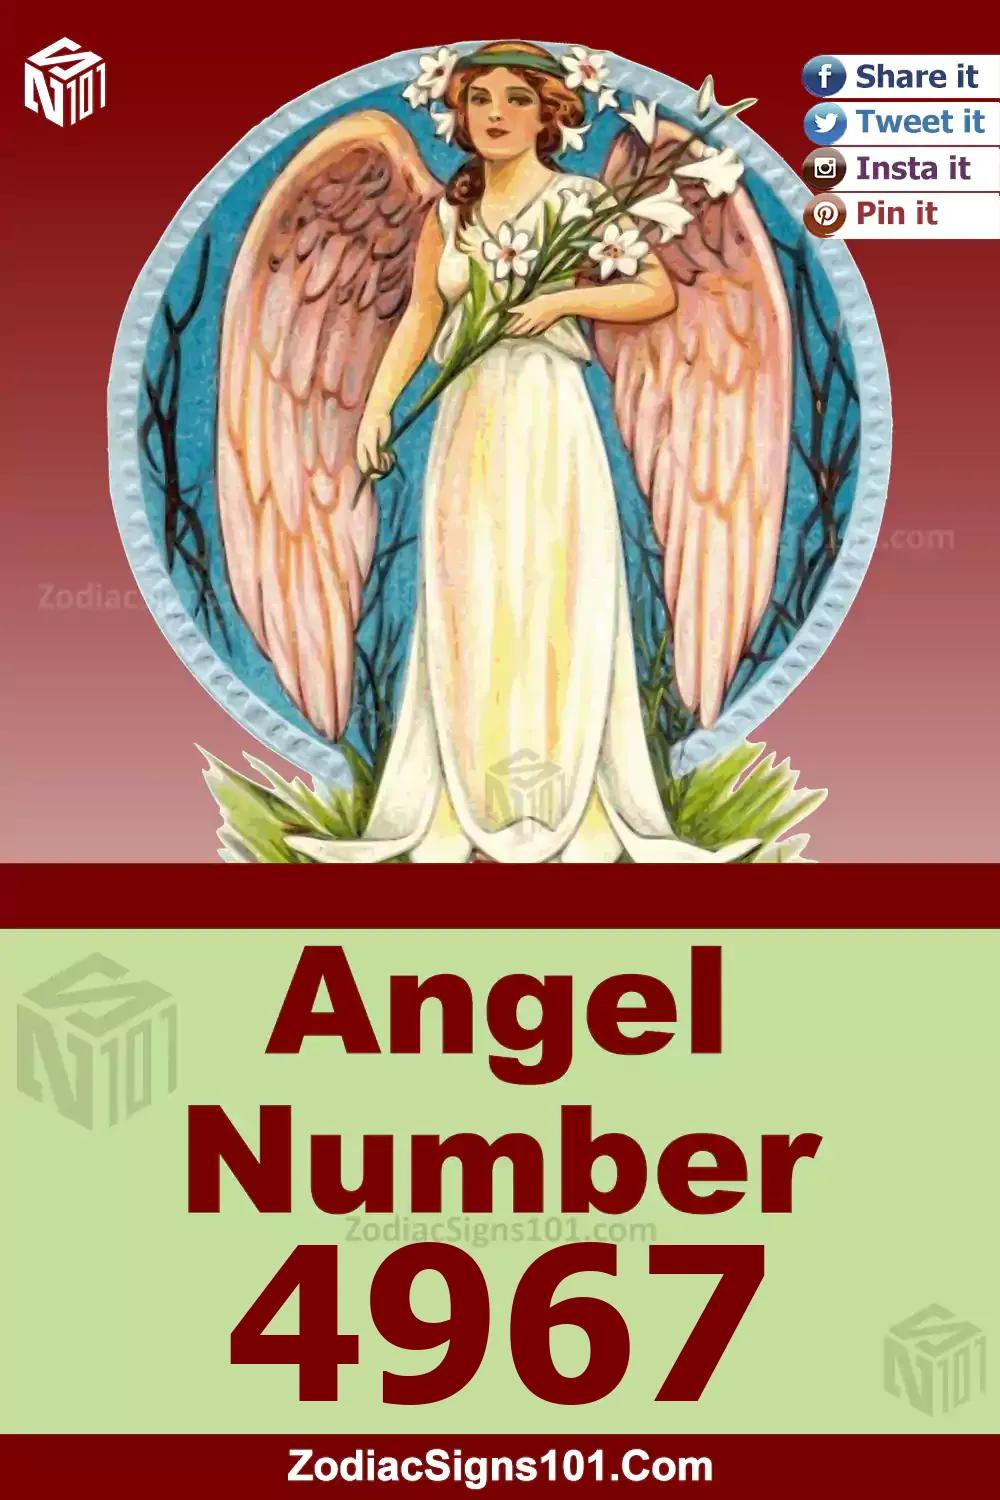 4967-Angel-Number-Meaning.jpg